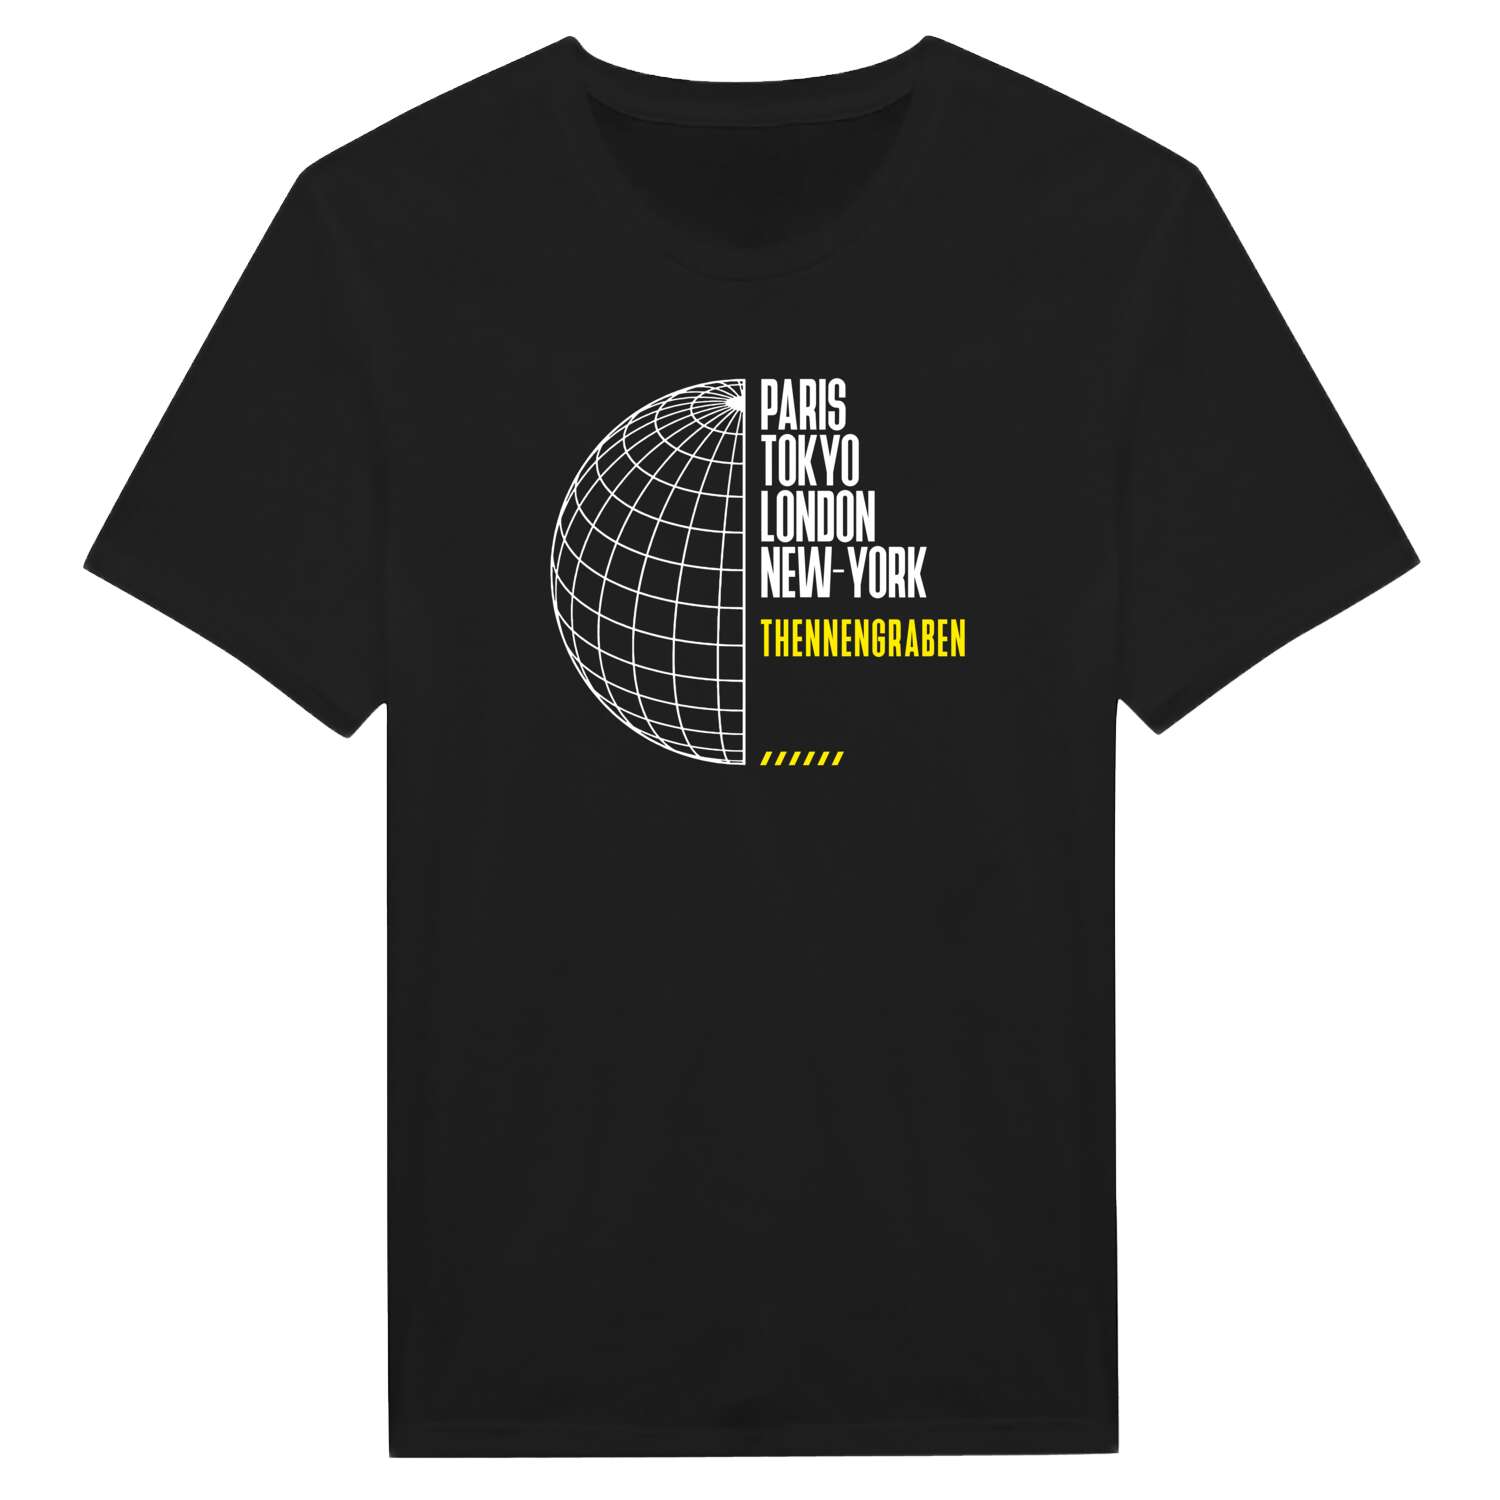 Thennengraben T-Shirt »Paris Tokyo London«